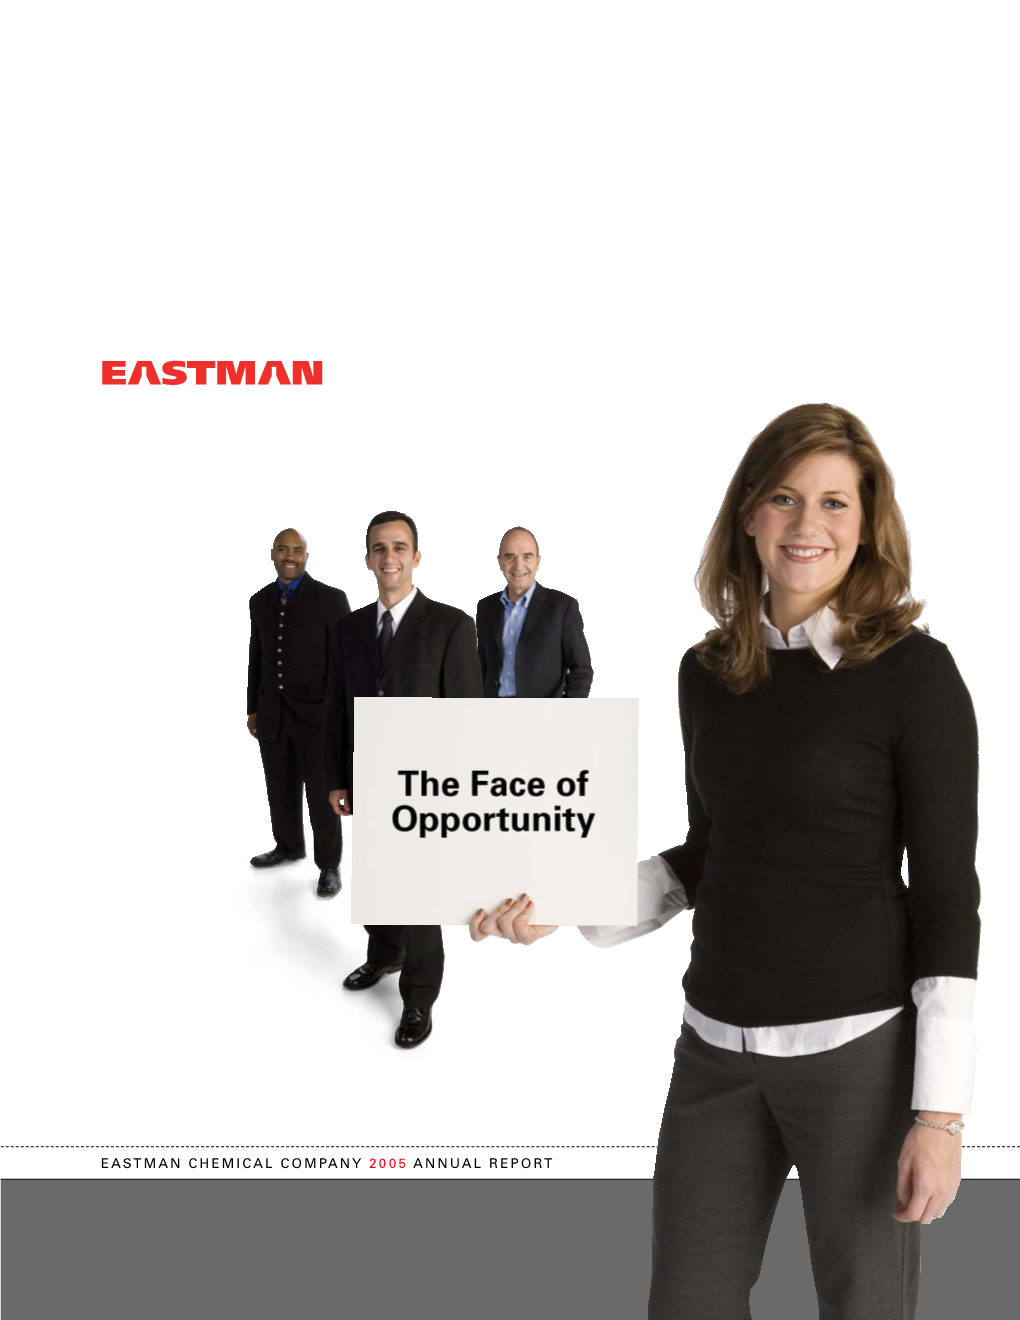 EASTMAN CHEMICAL COMPANY 2005 ANNUAL REPORT Eastman Chemical Company Manufactures and Markets Chemicals, Fibers and Plastics Worldwide